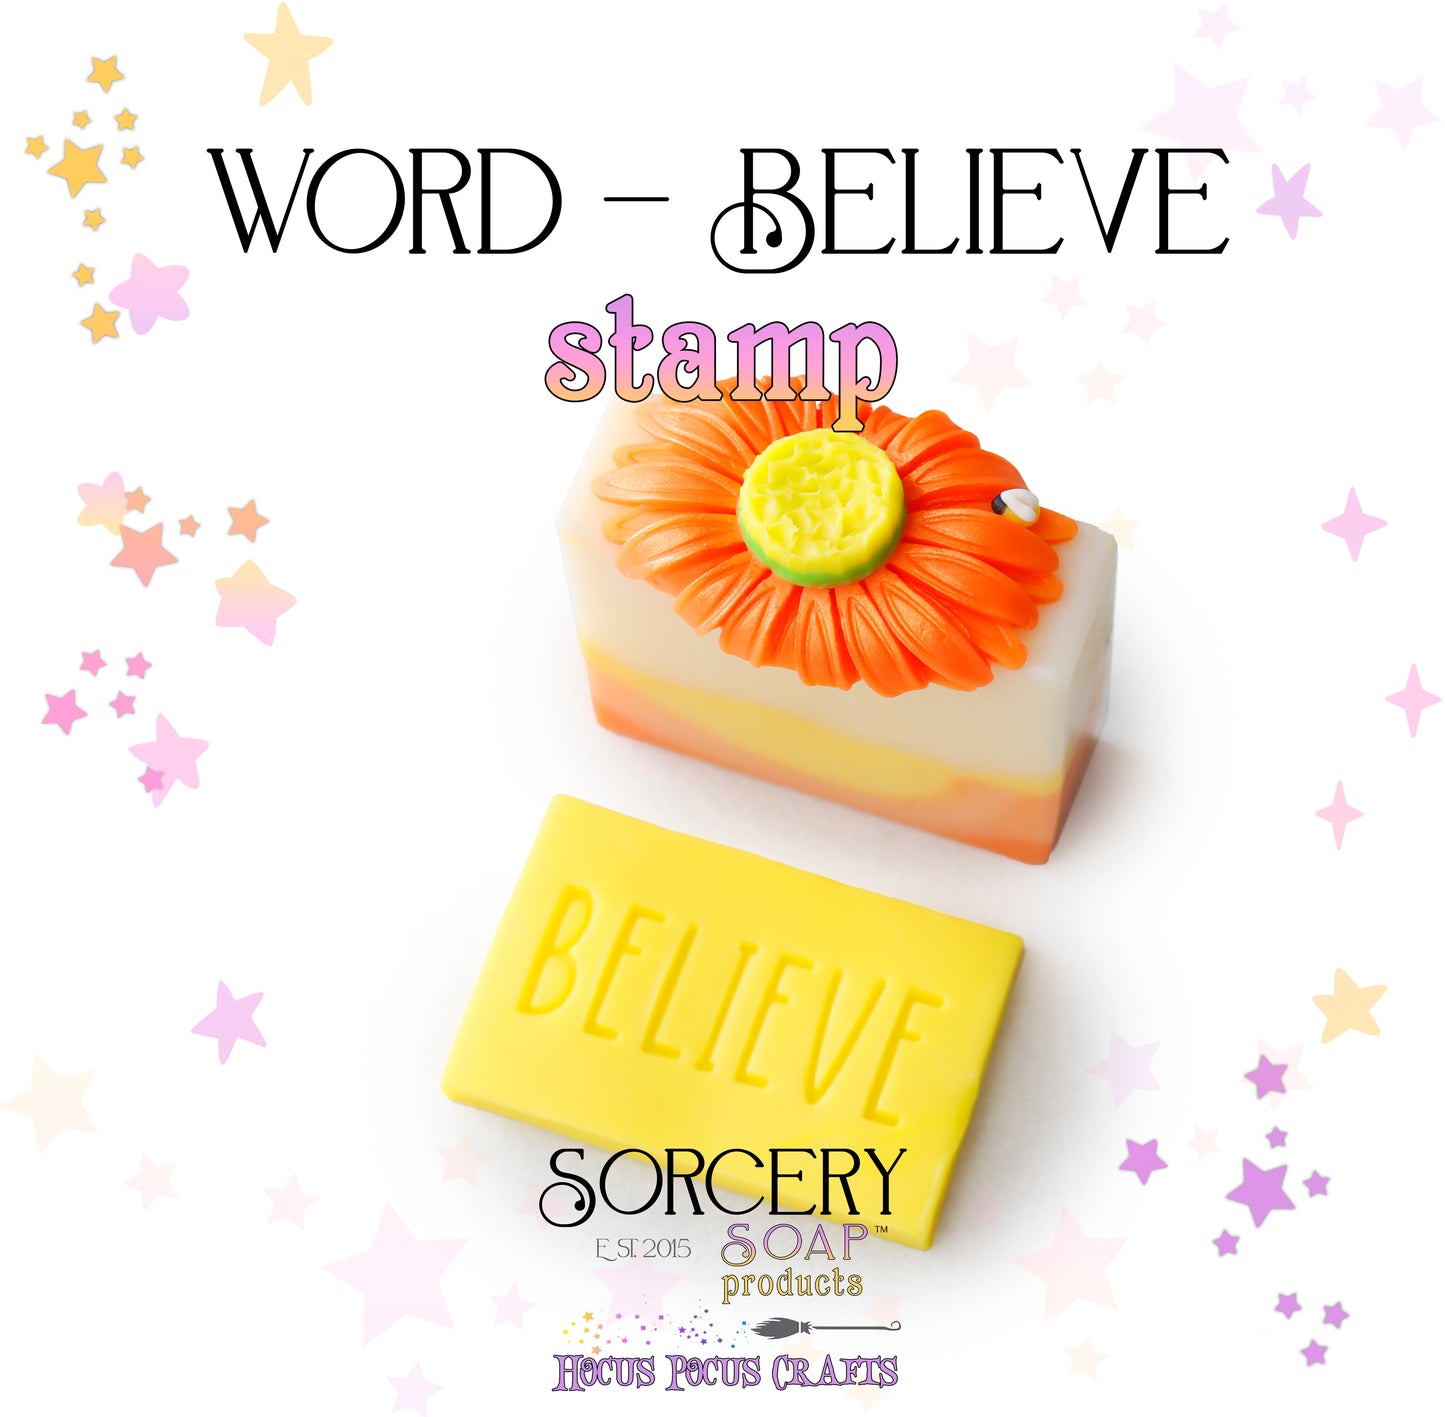 Word - Believe Stamp